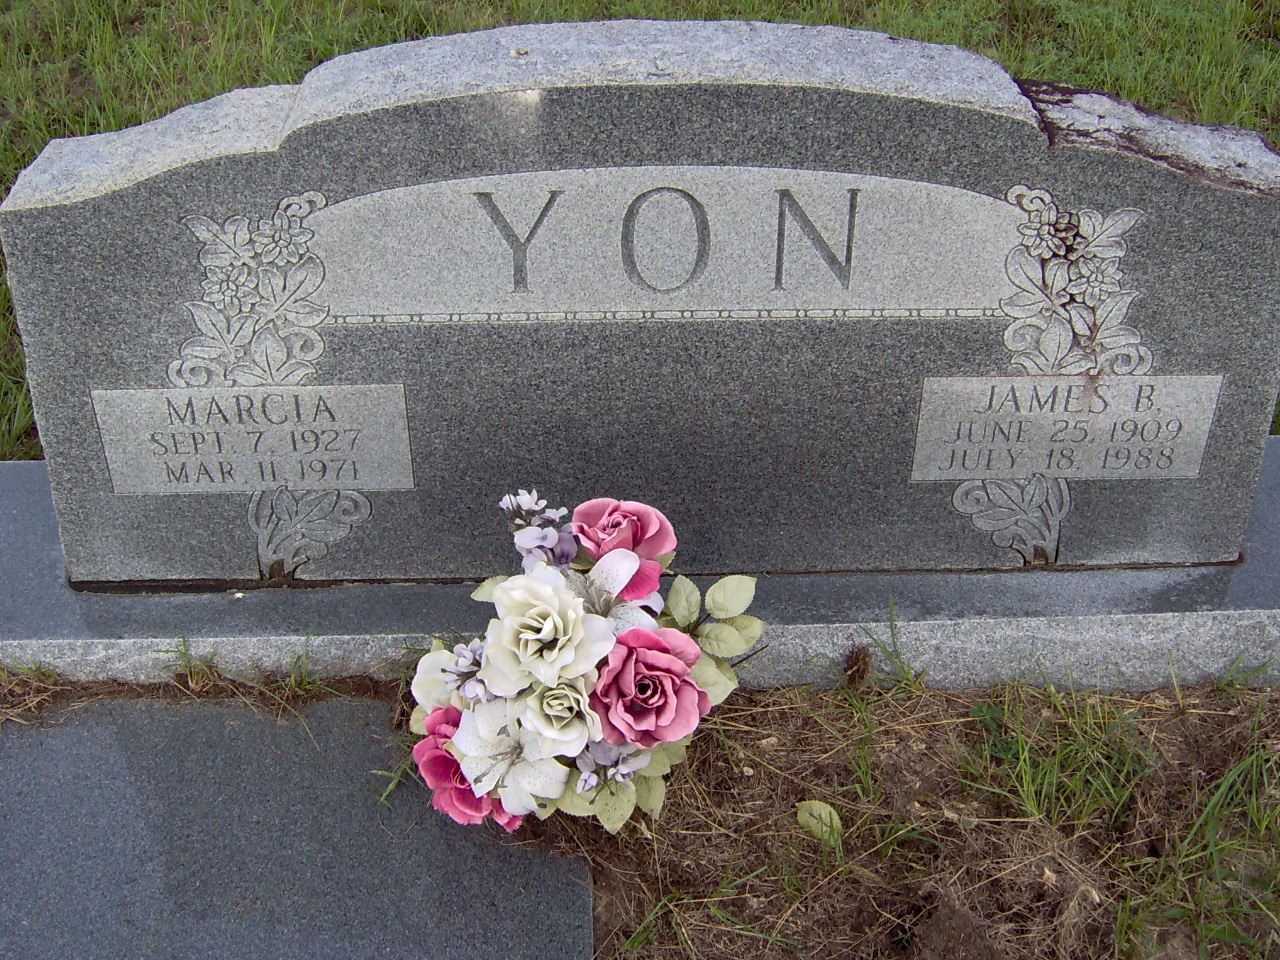 Headstone for Yon, Marcia